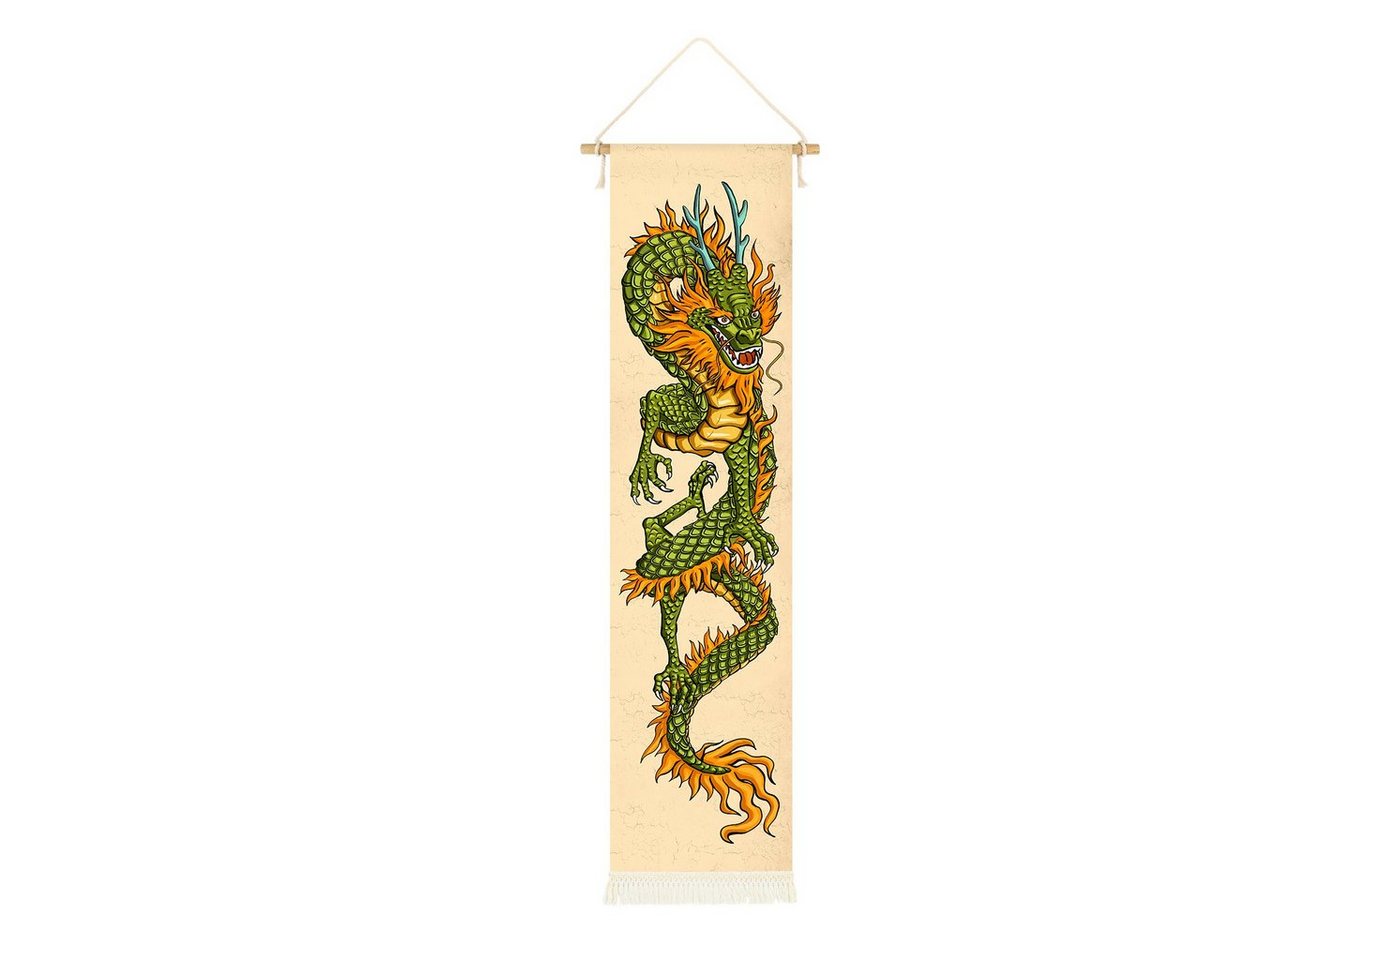 GalaxyCat Poster Asiatisches Drachen Rollbild, Asian Dragon, Wandbild Drachen Farbdru, Chinesischer Drache, Farbdruck eines chinesischen Anime Drachen von GalaxyCat